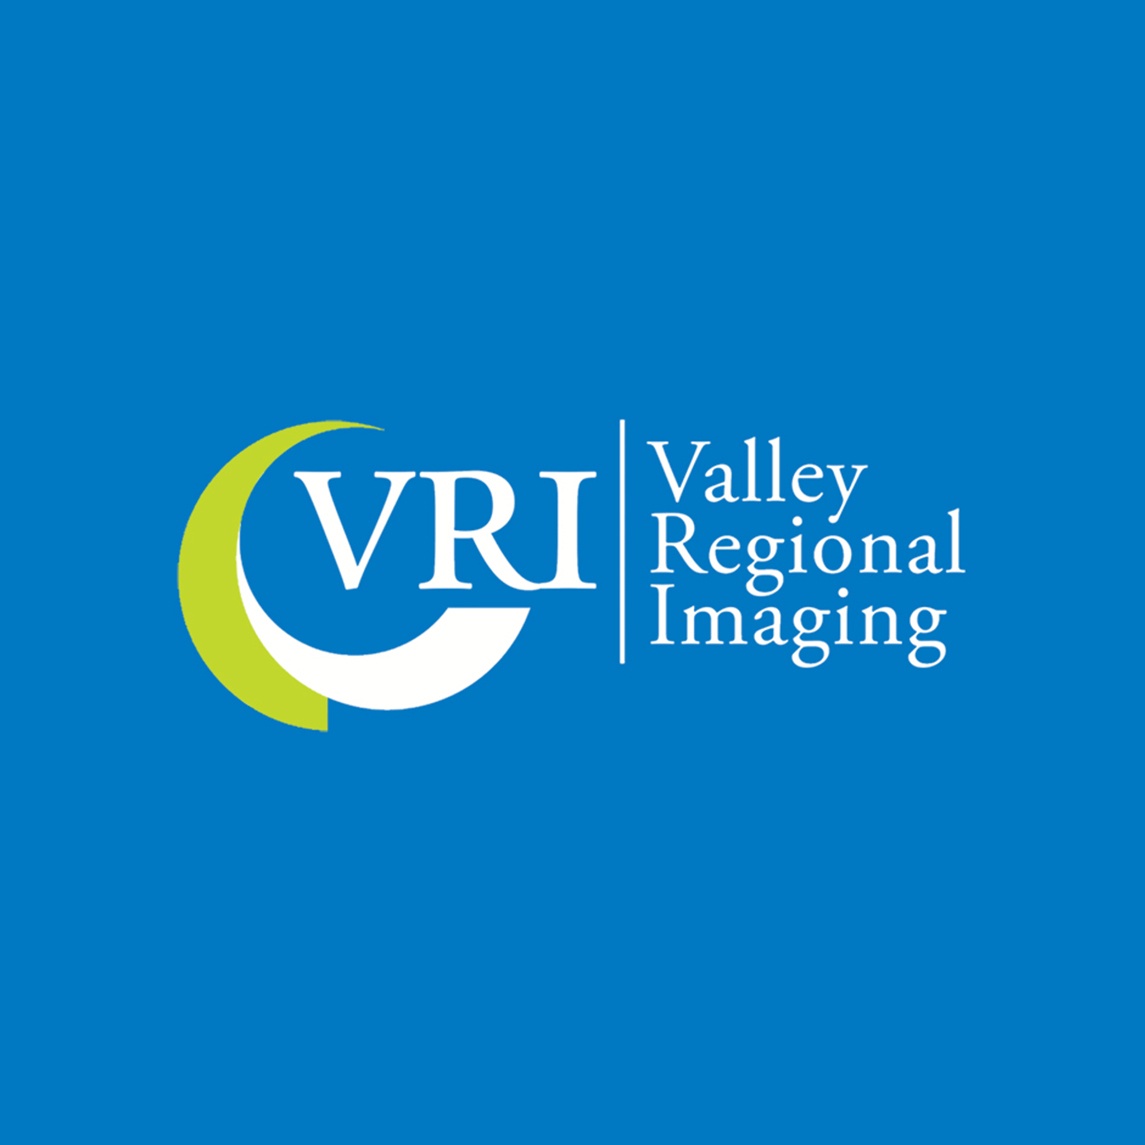 Wacom for Business Healthcare esignature Valley Regional Imaging